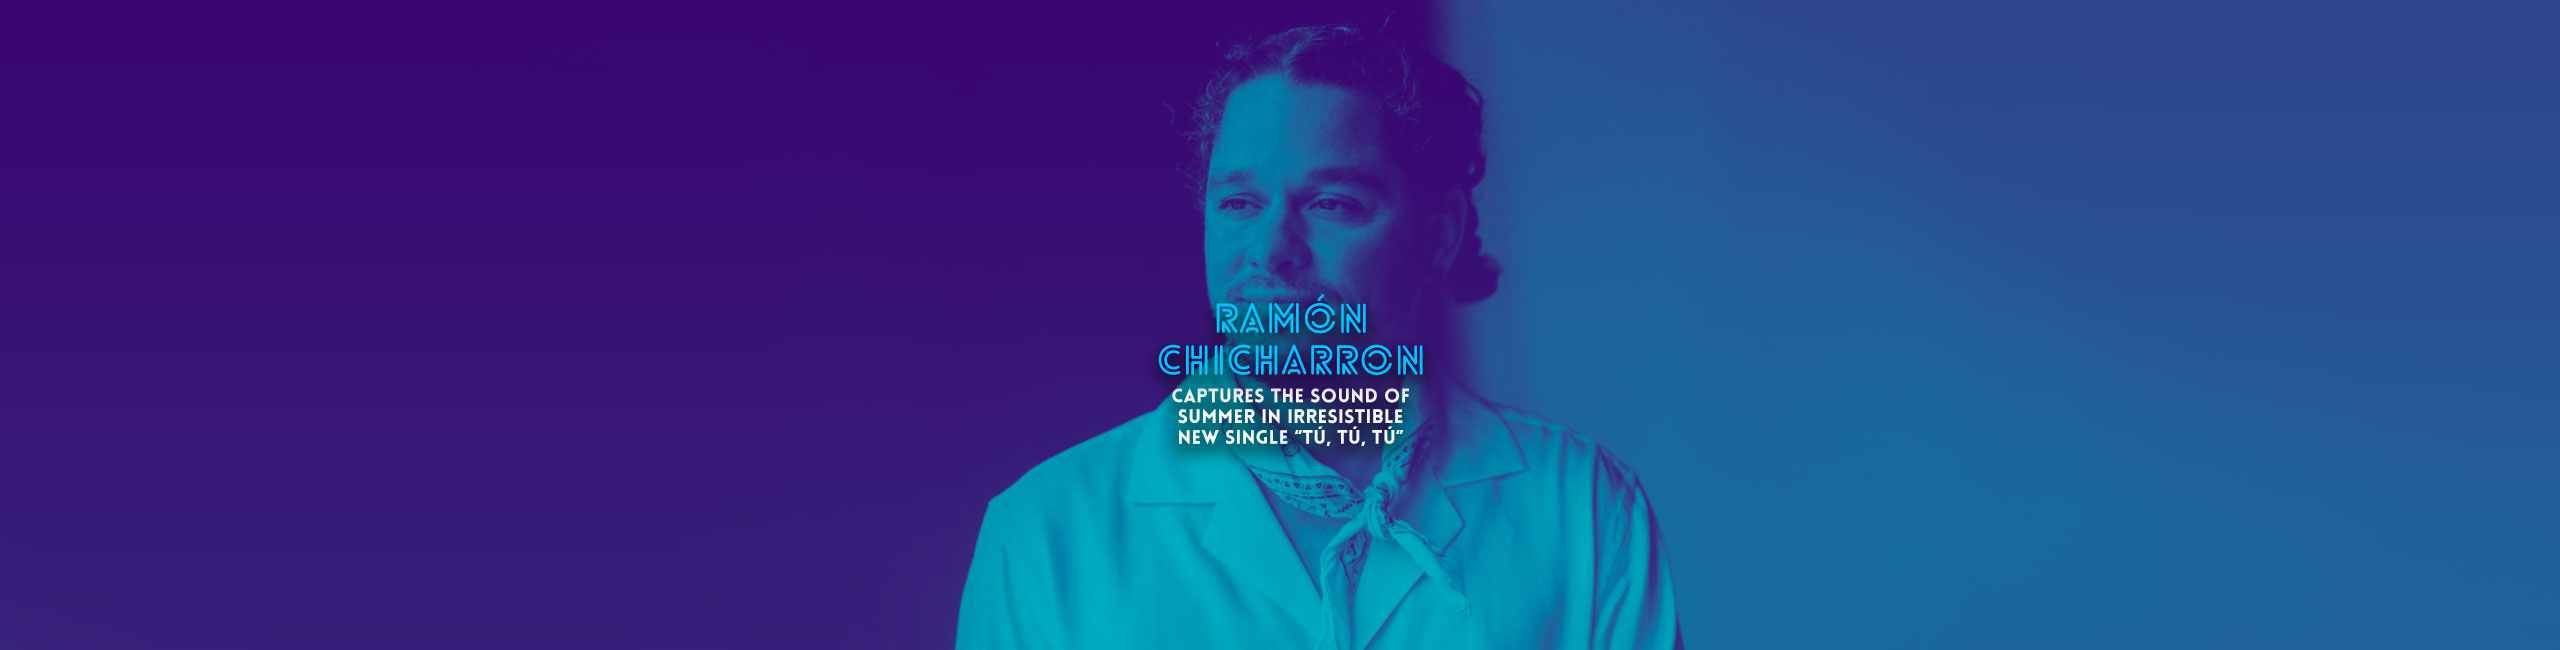 Ramón Chicharron captures the sound of summer in irresistible new single “TÚ, TÚ, TÚ”